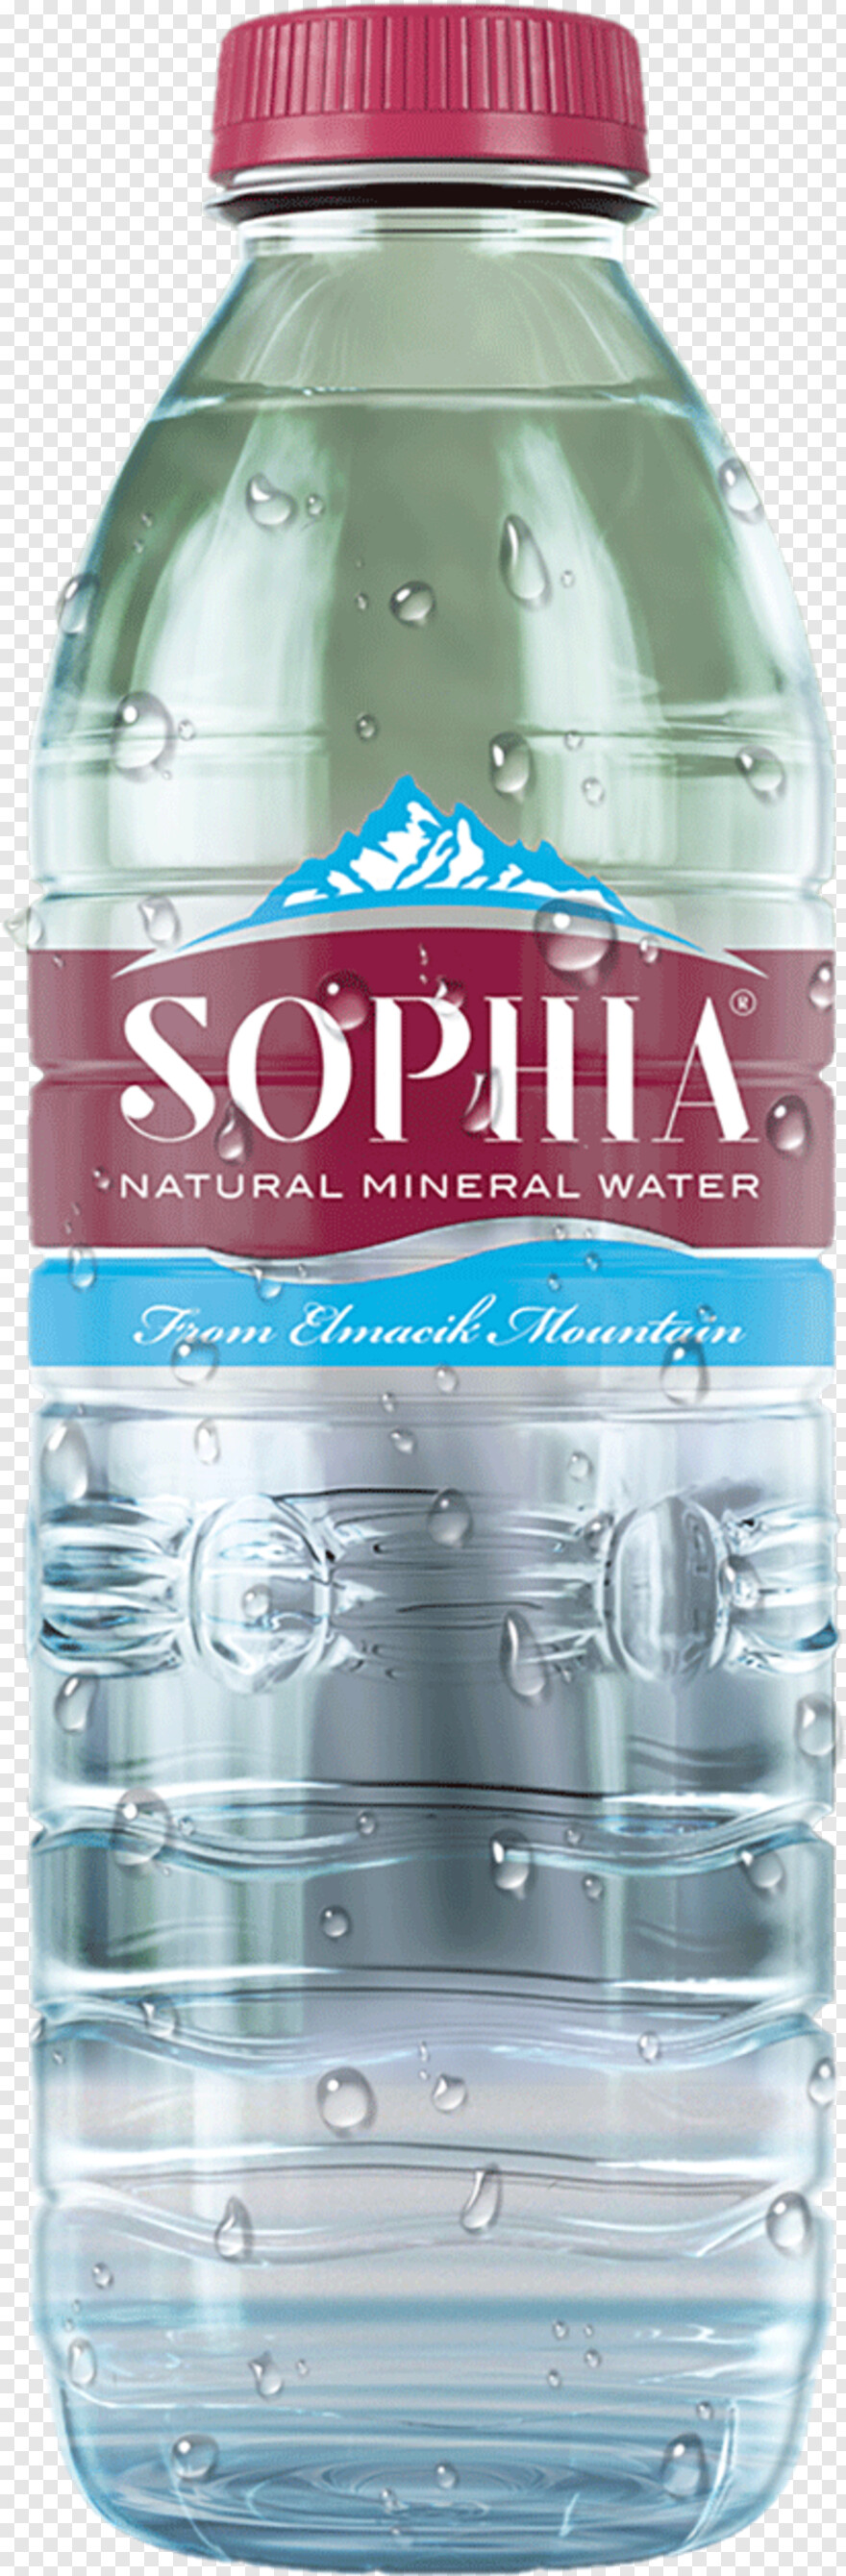 mineral-water-bottle # 324344